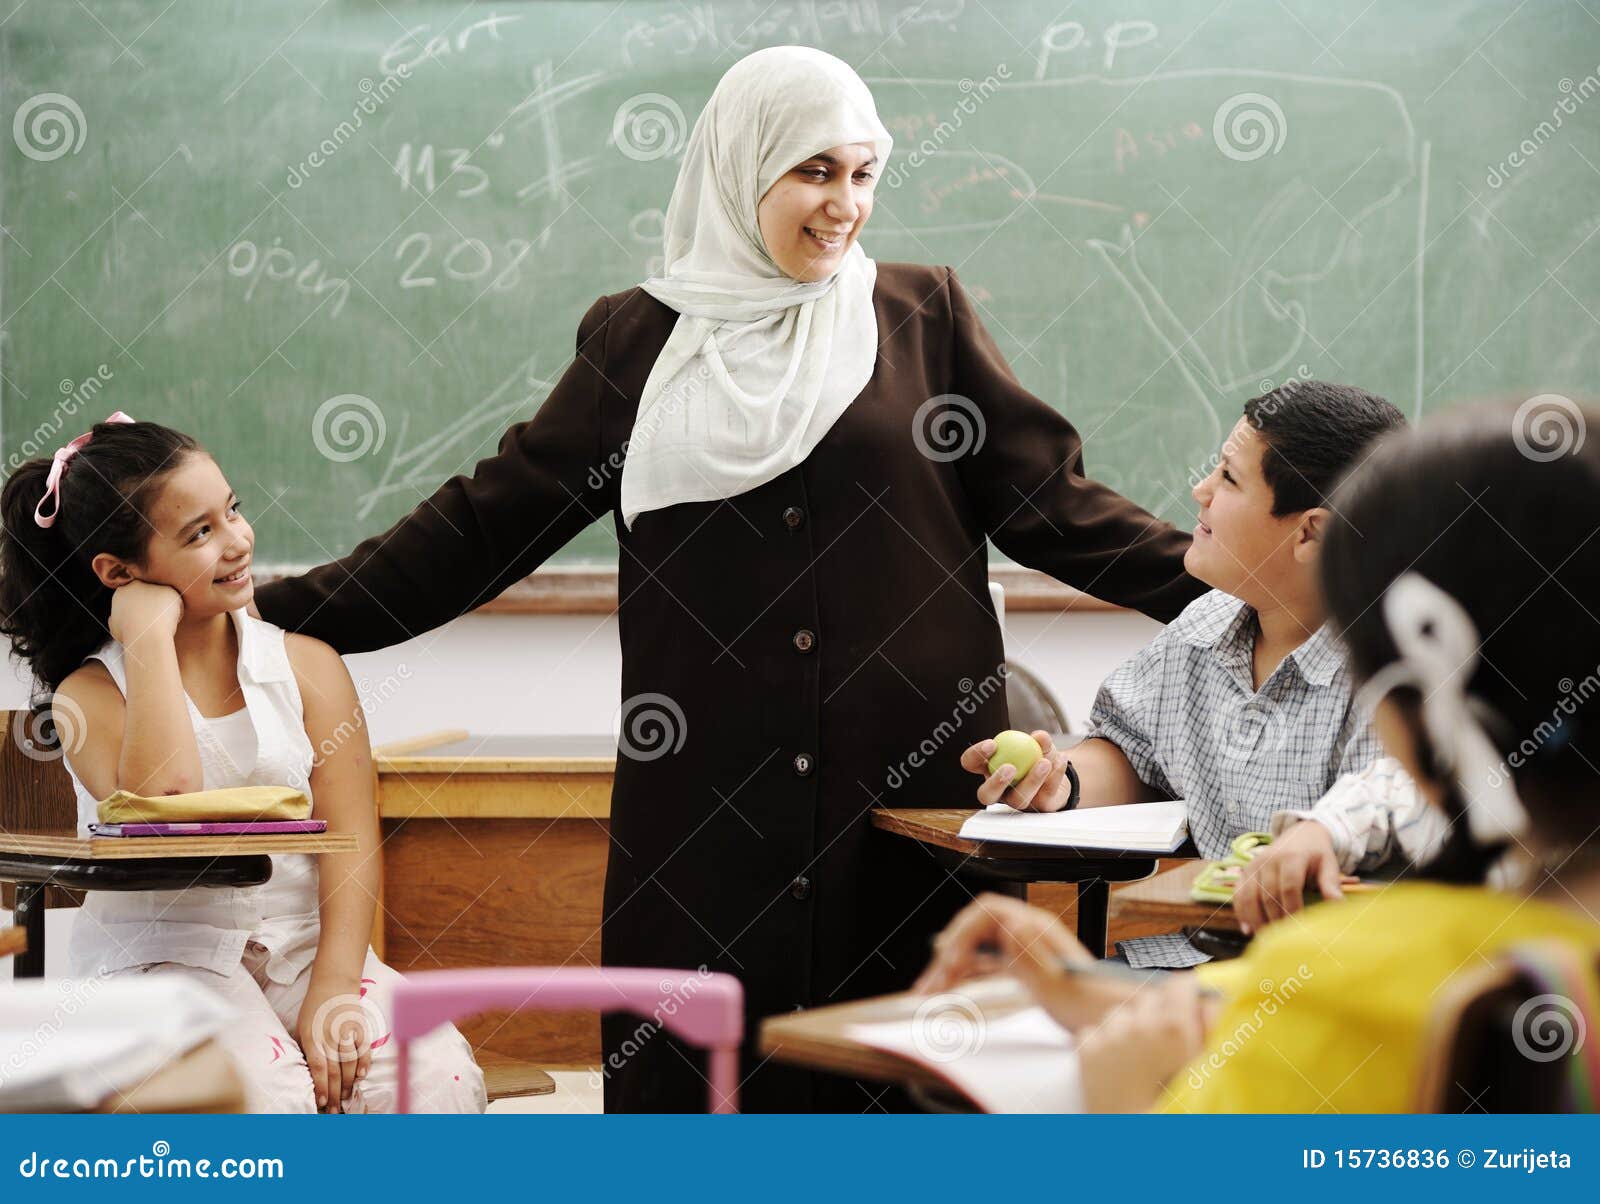 muslim female teacher with children in classroom